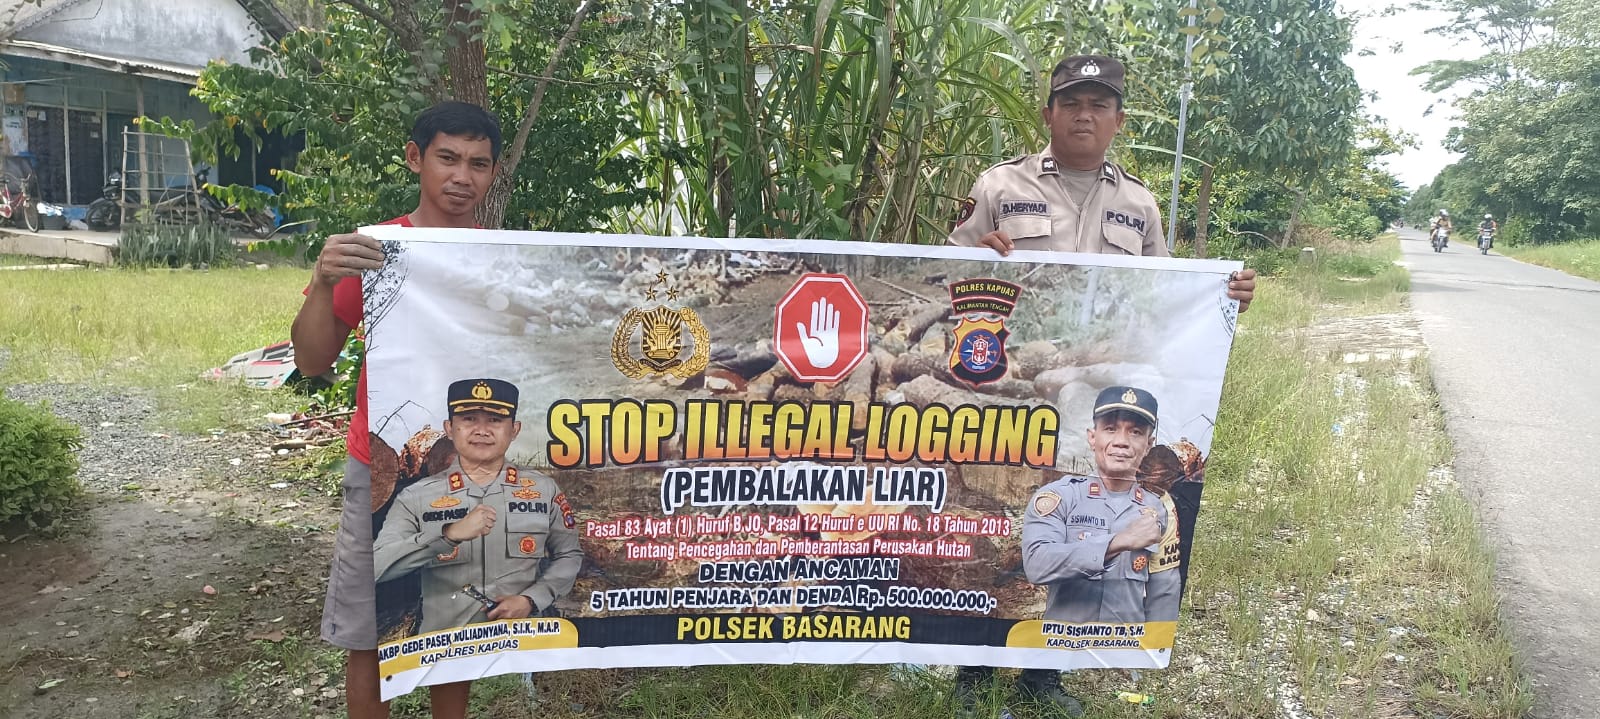 Polsek Basarang Sosialisasi Stop Ilegal Logging Kepada Warga